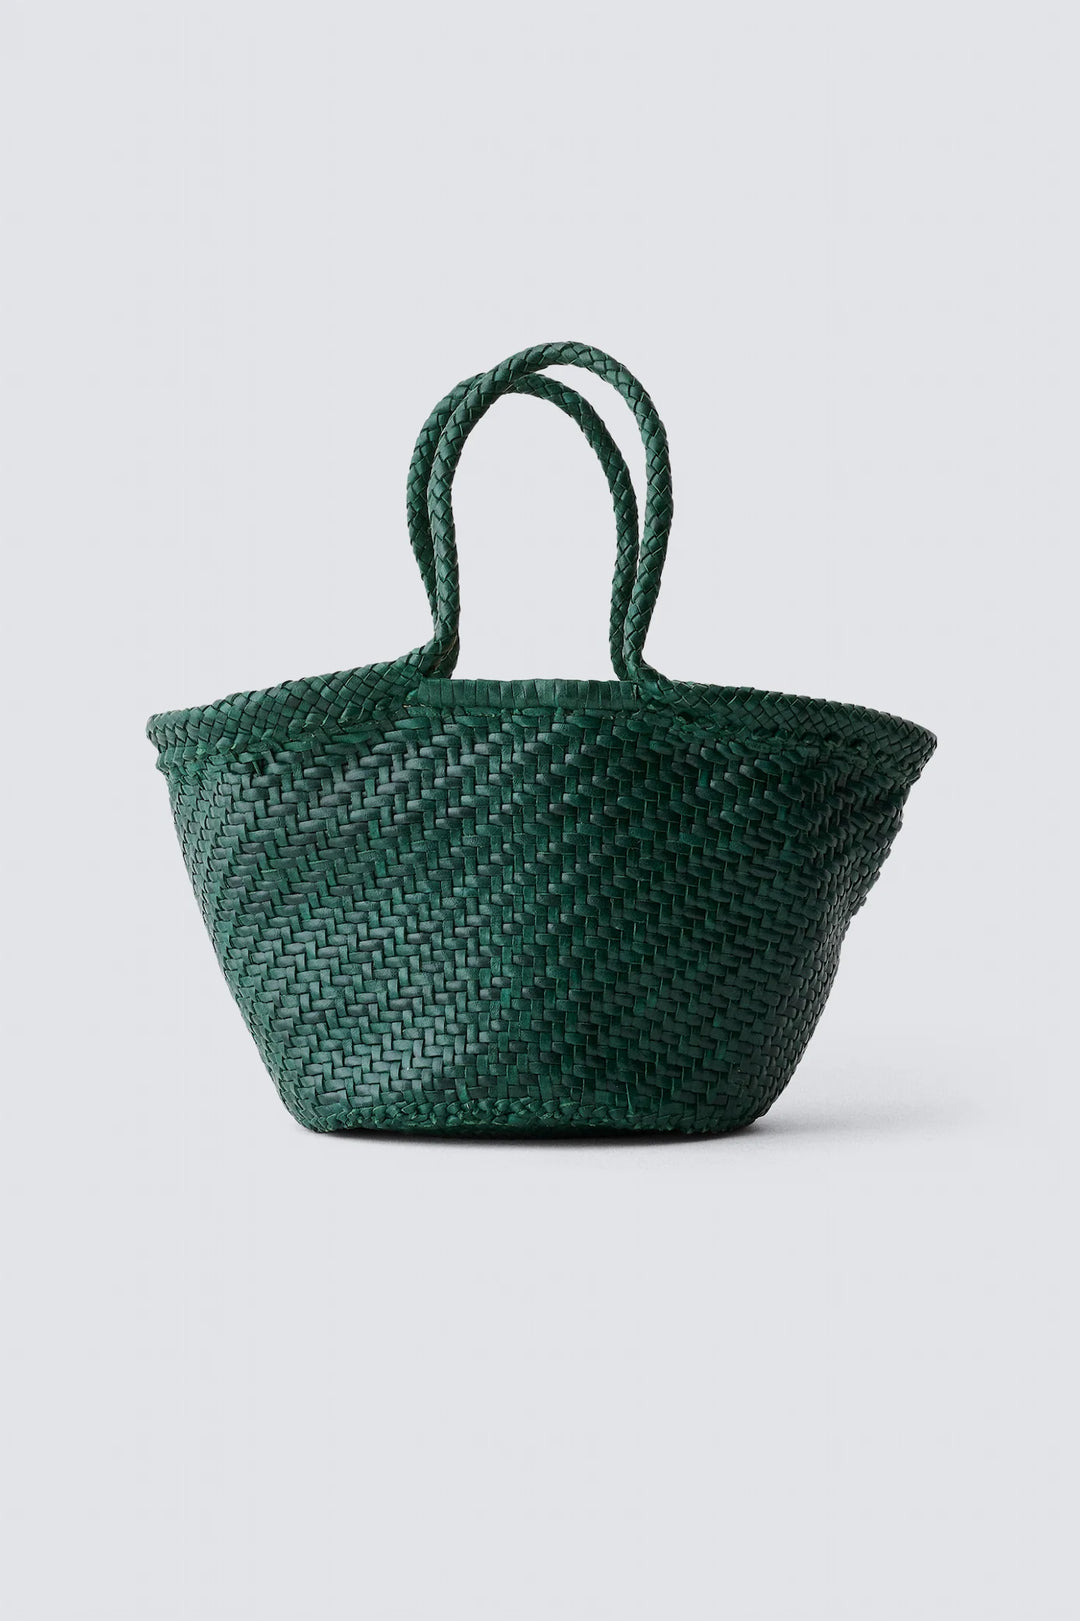 Dragon Diffusion - Martha Forest Green - Woven Leather Bag Handmade